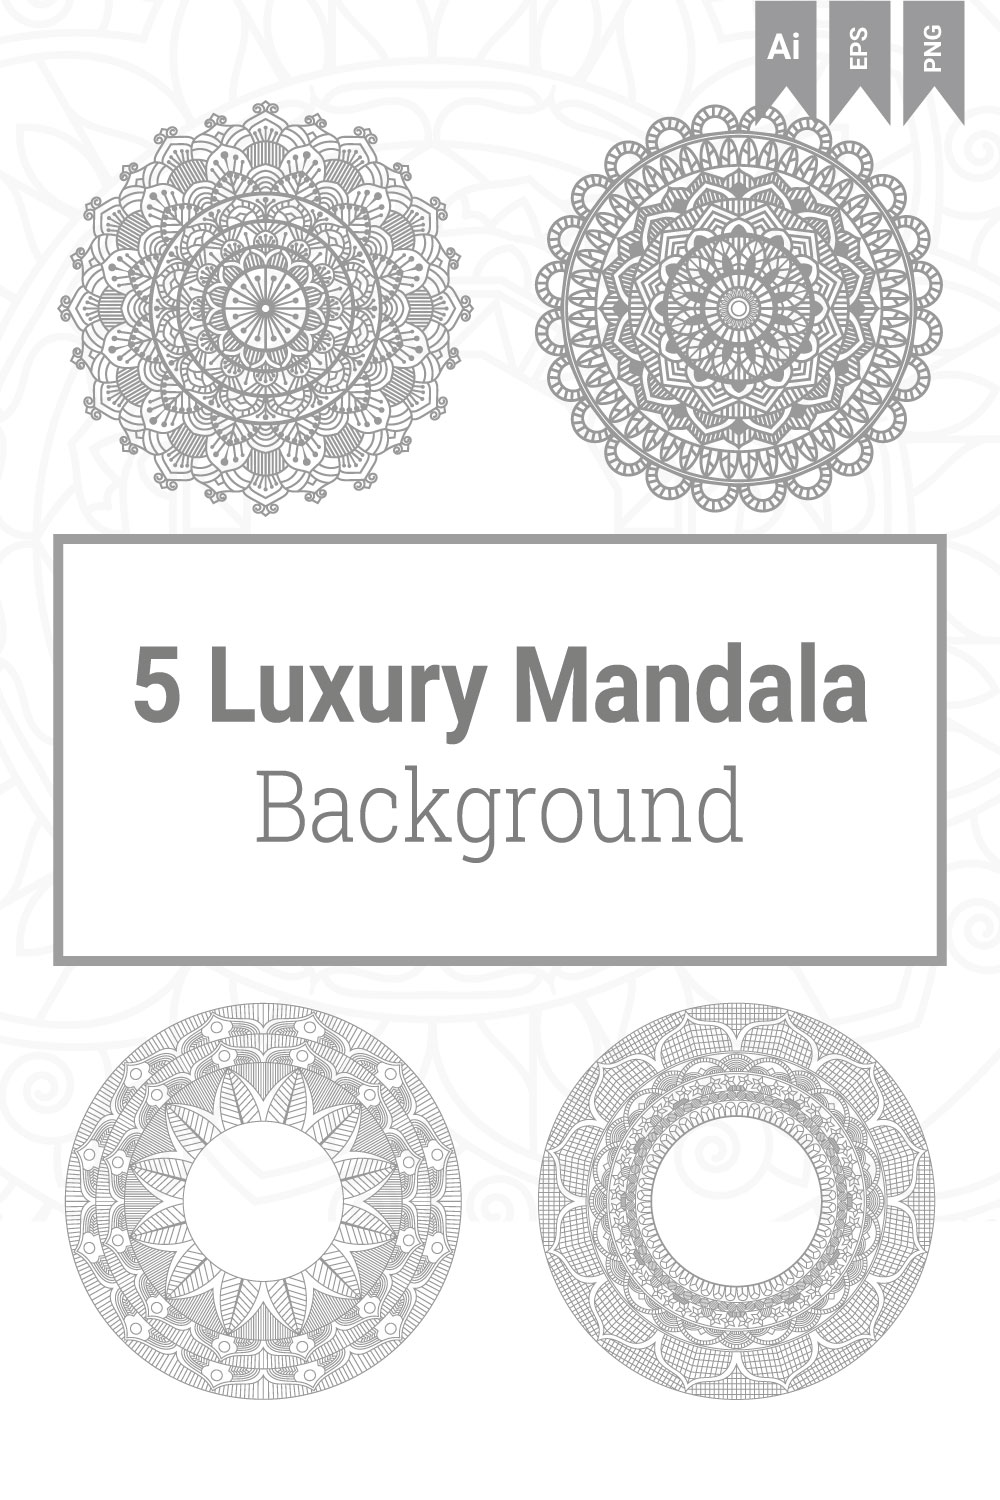 Luxury Mandala Vector with Golden Style Background pinterest image.